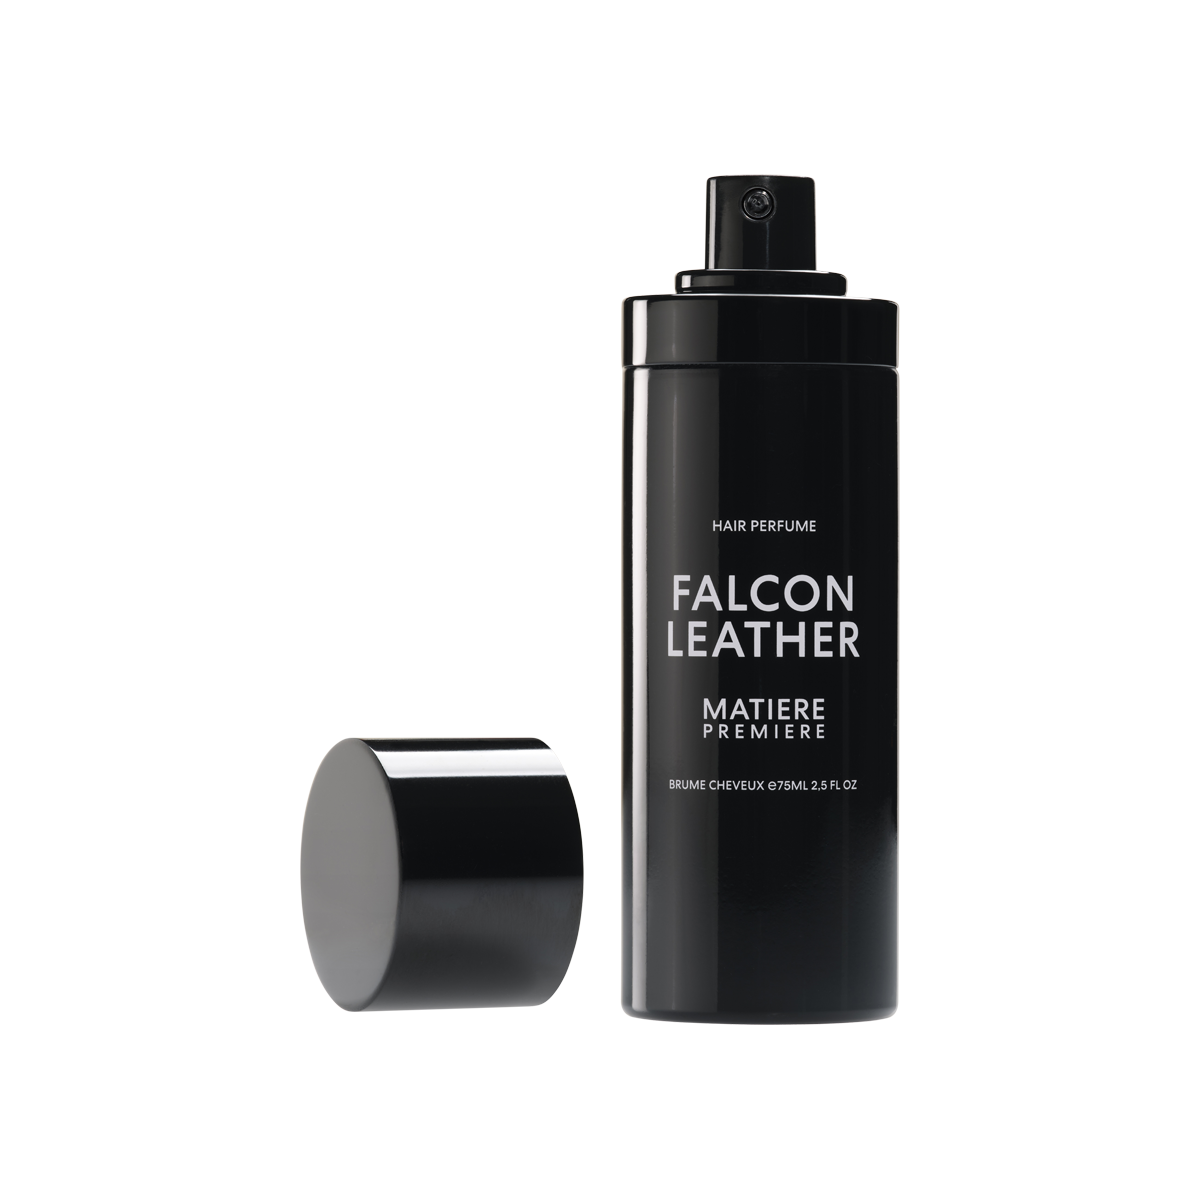 Matiere Premiere - Hair Perfume Falcon Leather